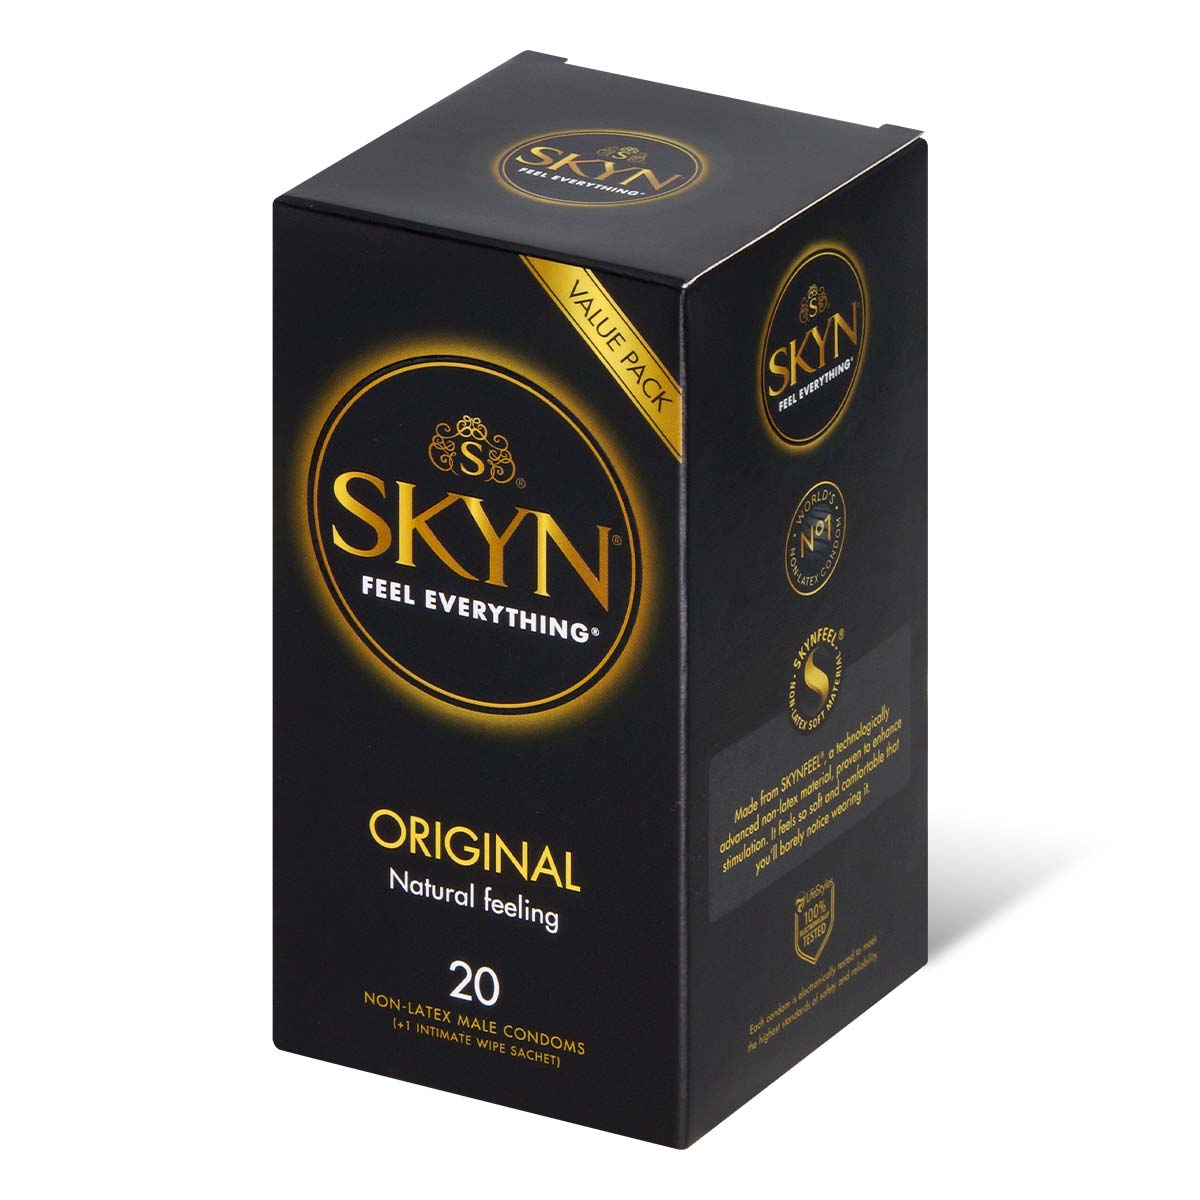 SKYN Original 20's Pack iR Condom-p_1